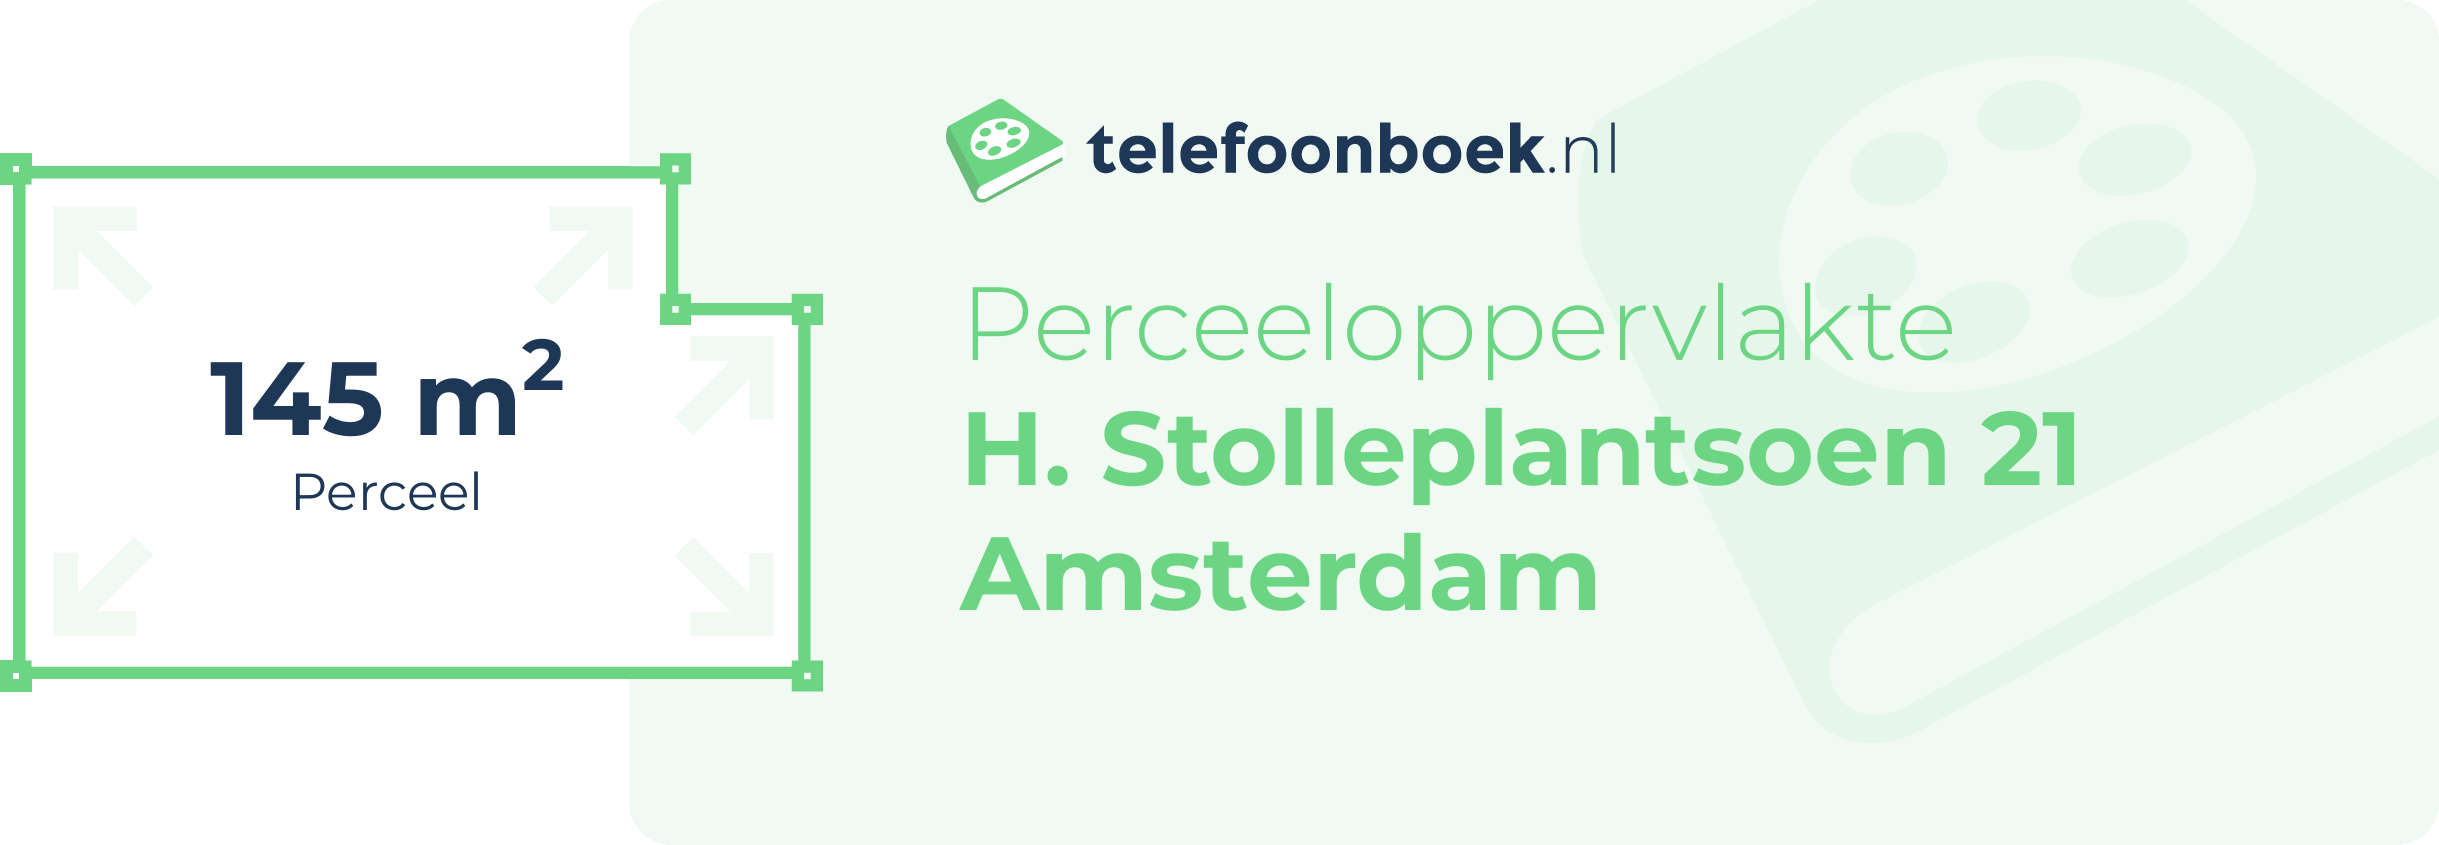 Perceeloppervlakte H. Stolleplantsoen 21 Amsterdam